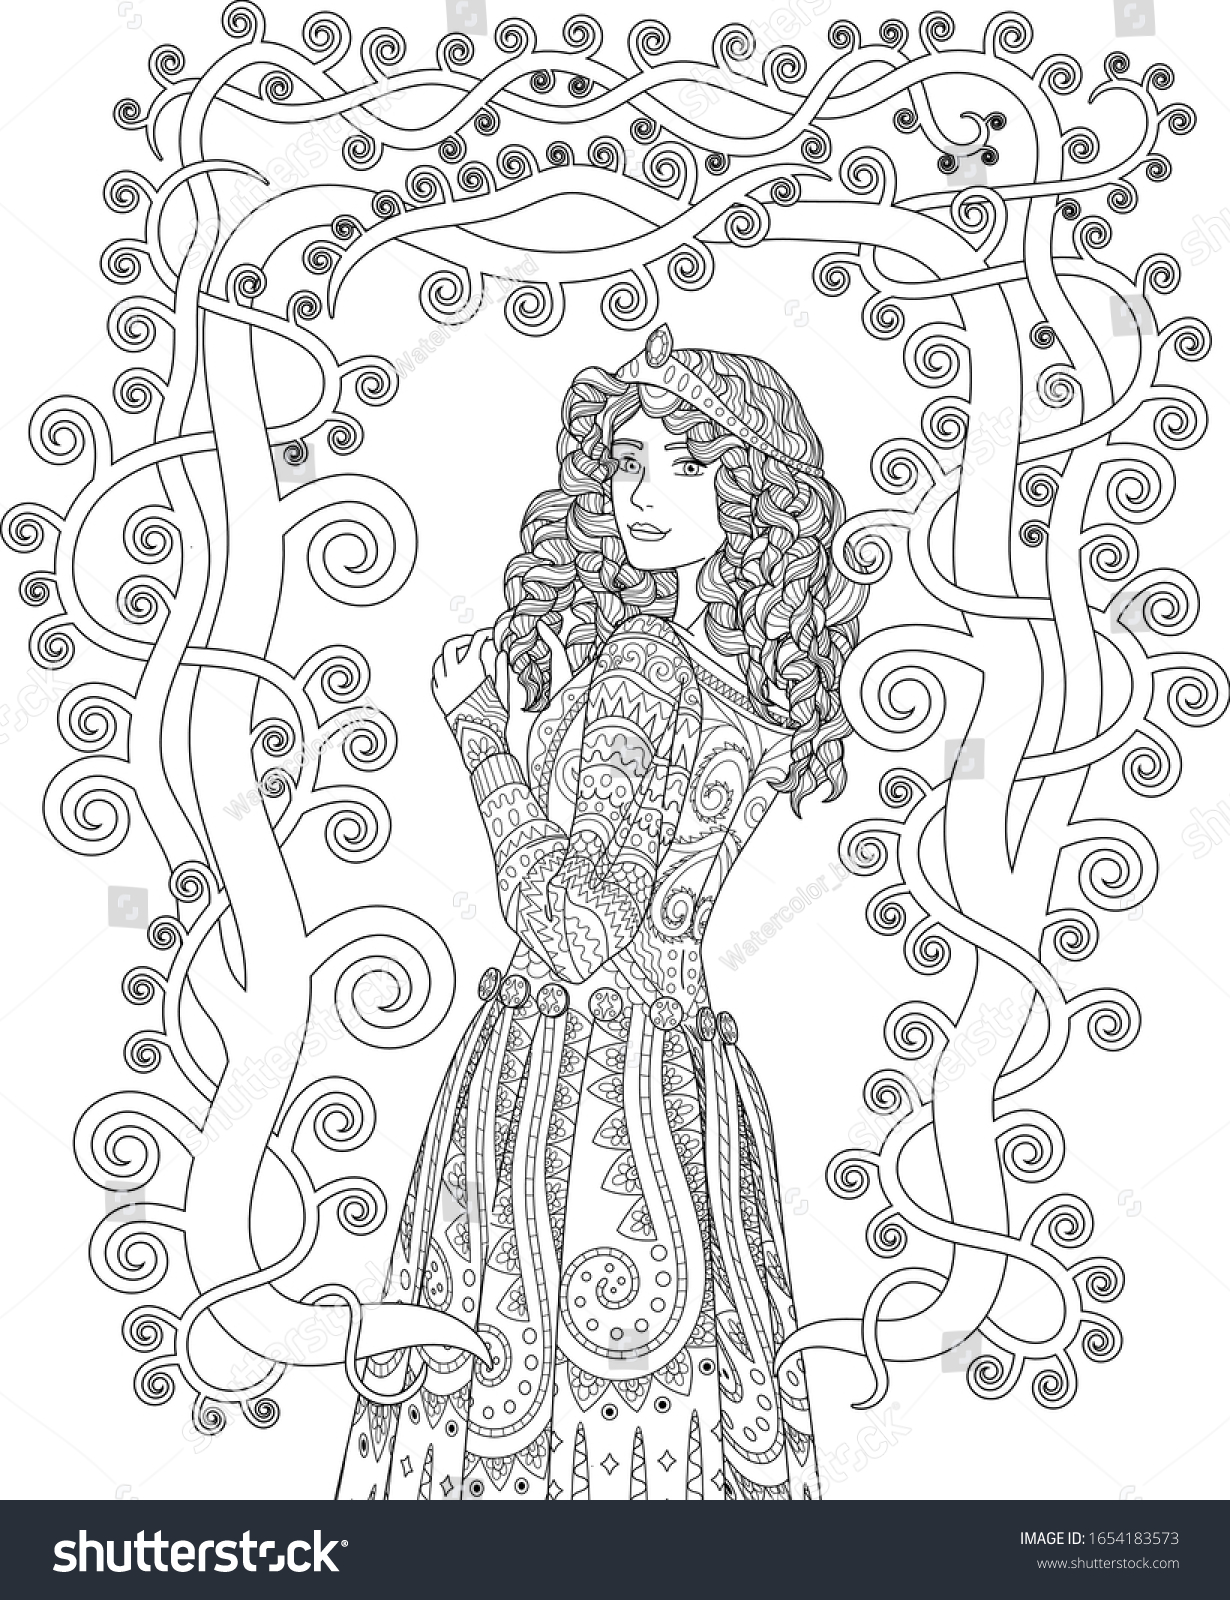 Coloring book adults beautiful medieval princess stock vector royalty free